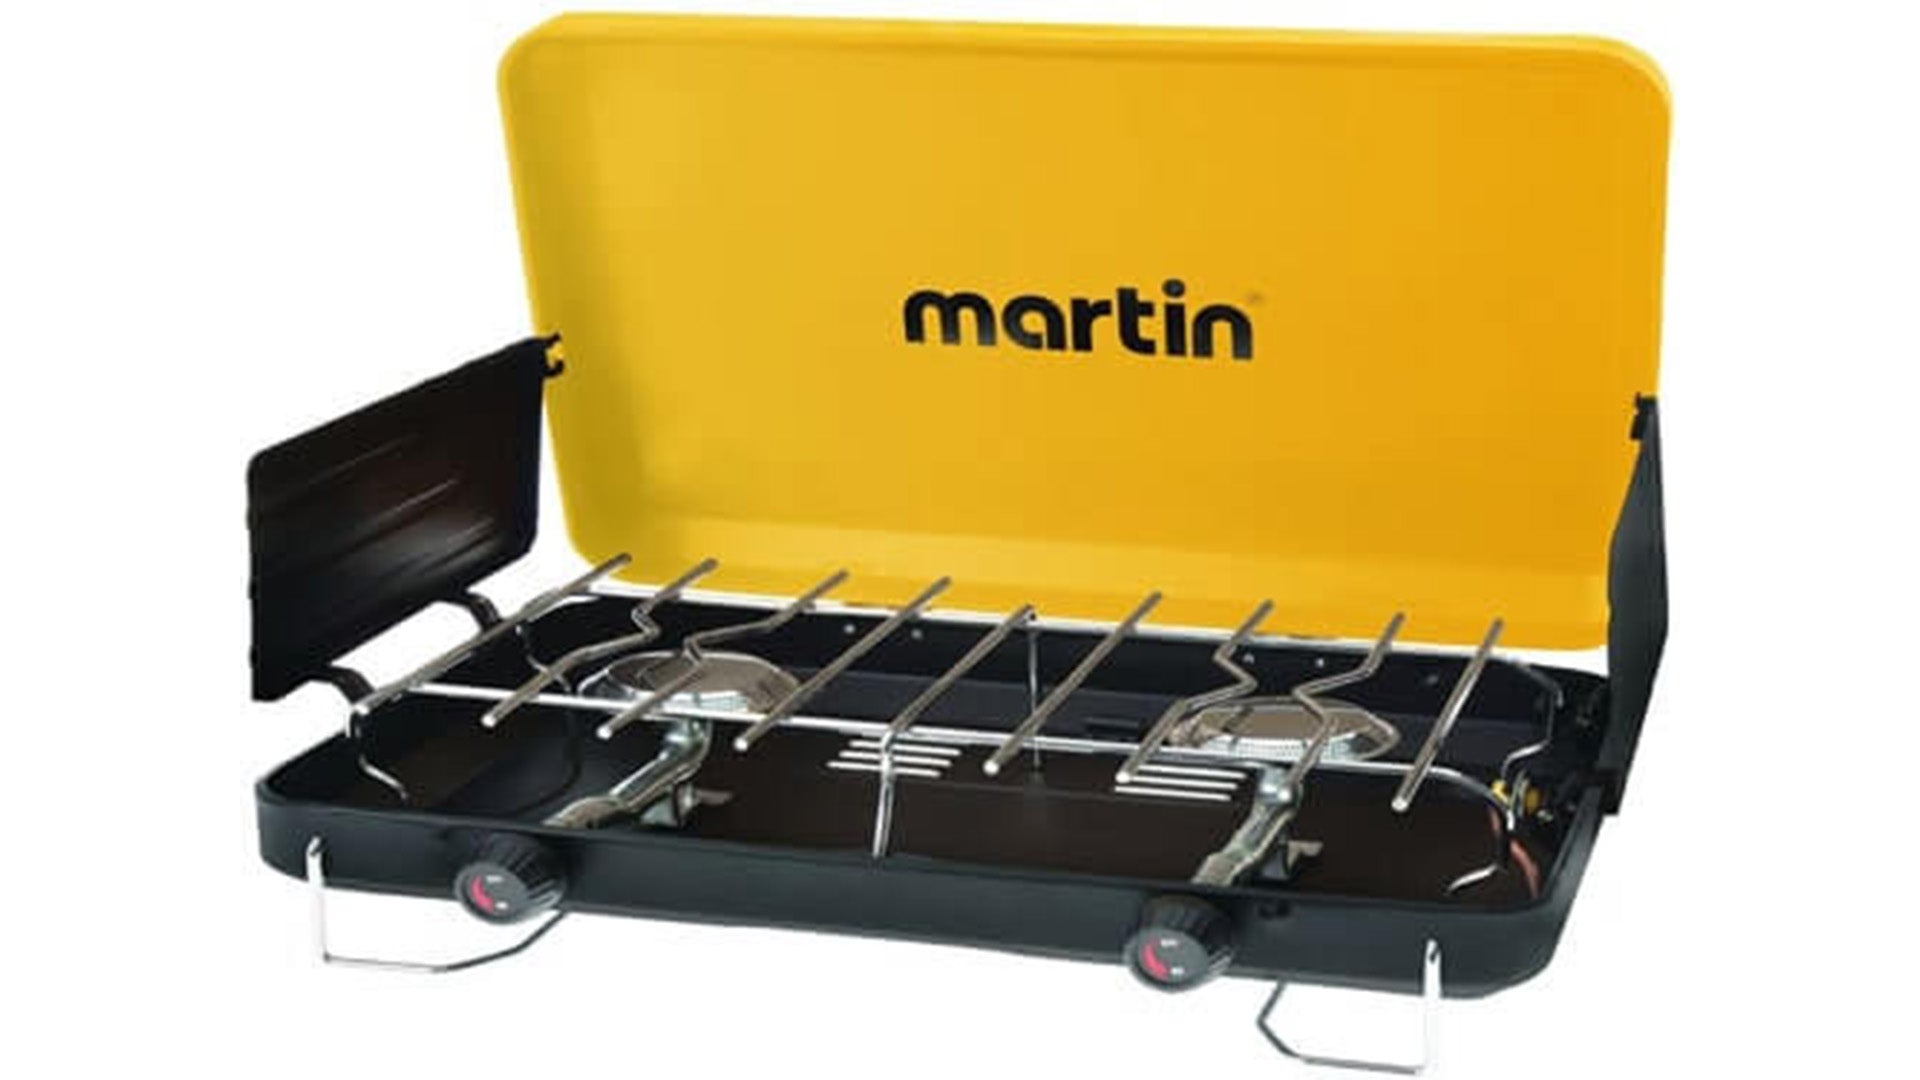 Martin MCS-200 propane stove